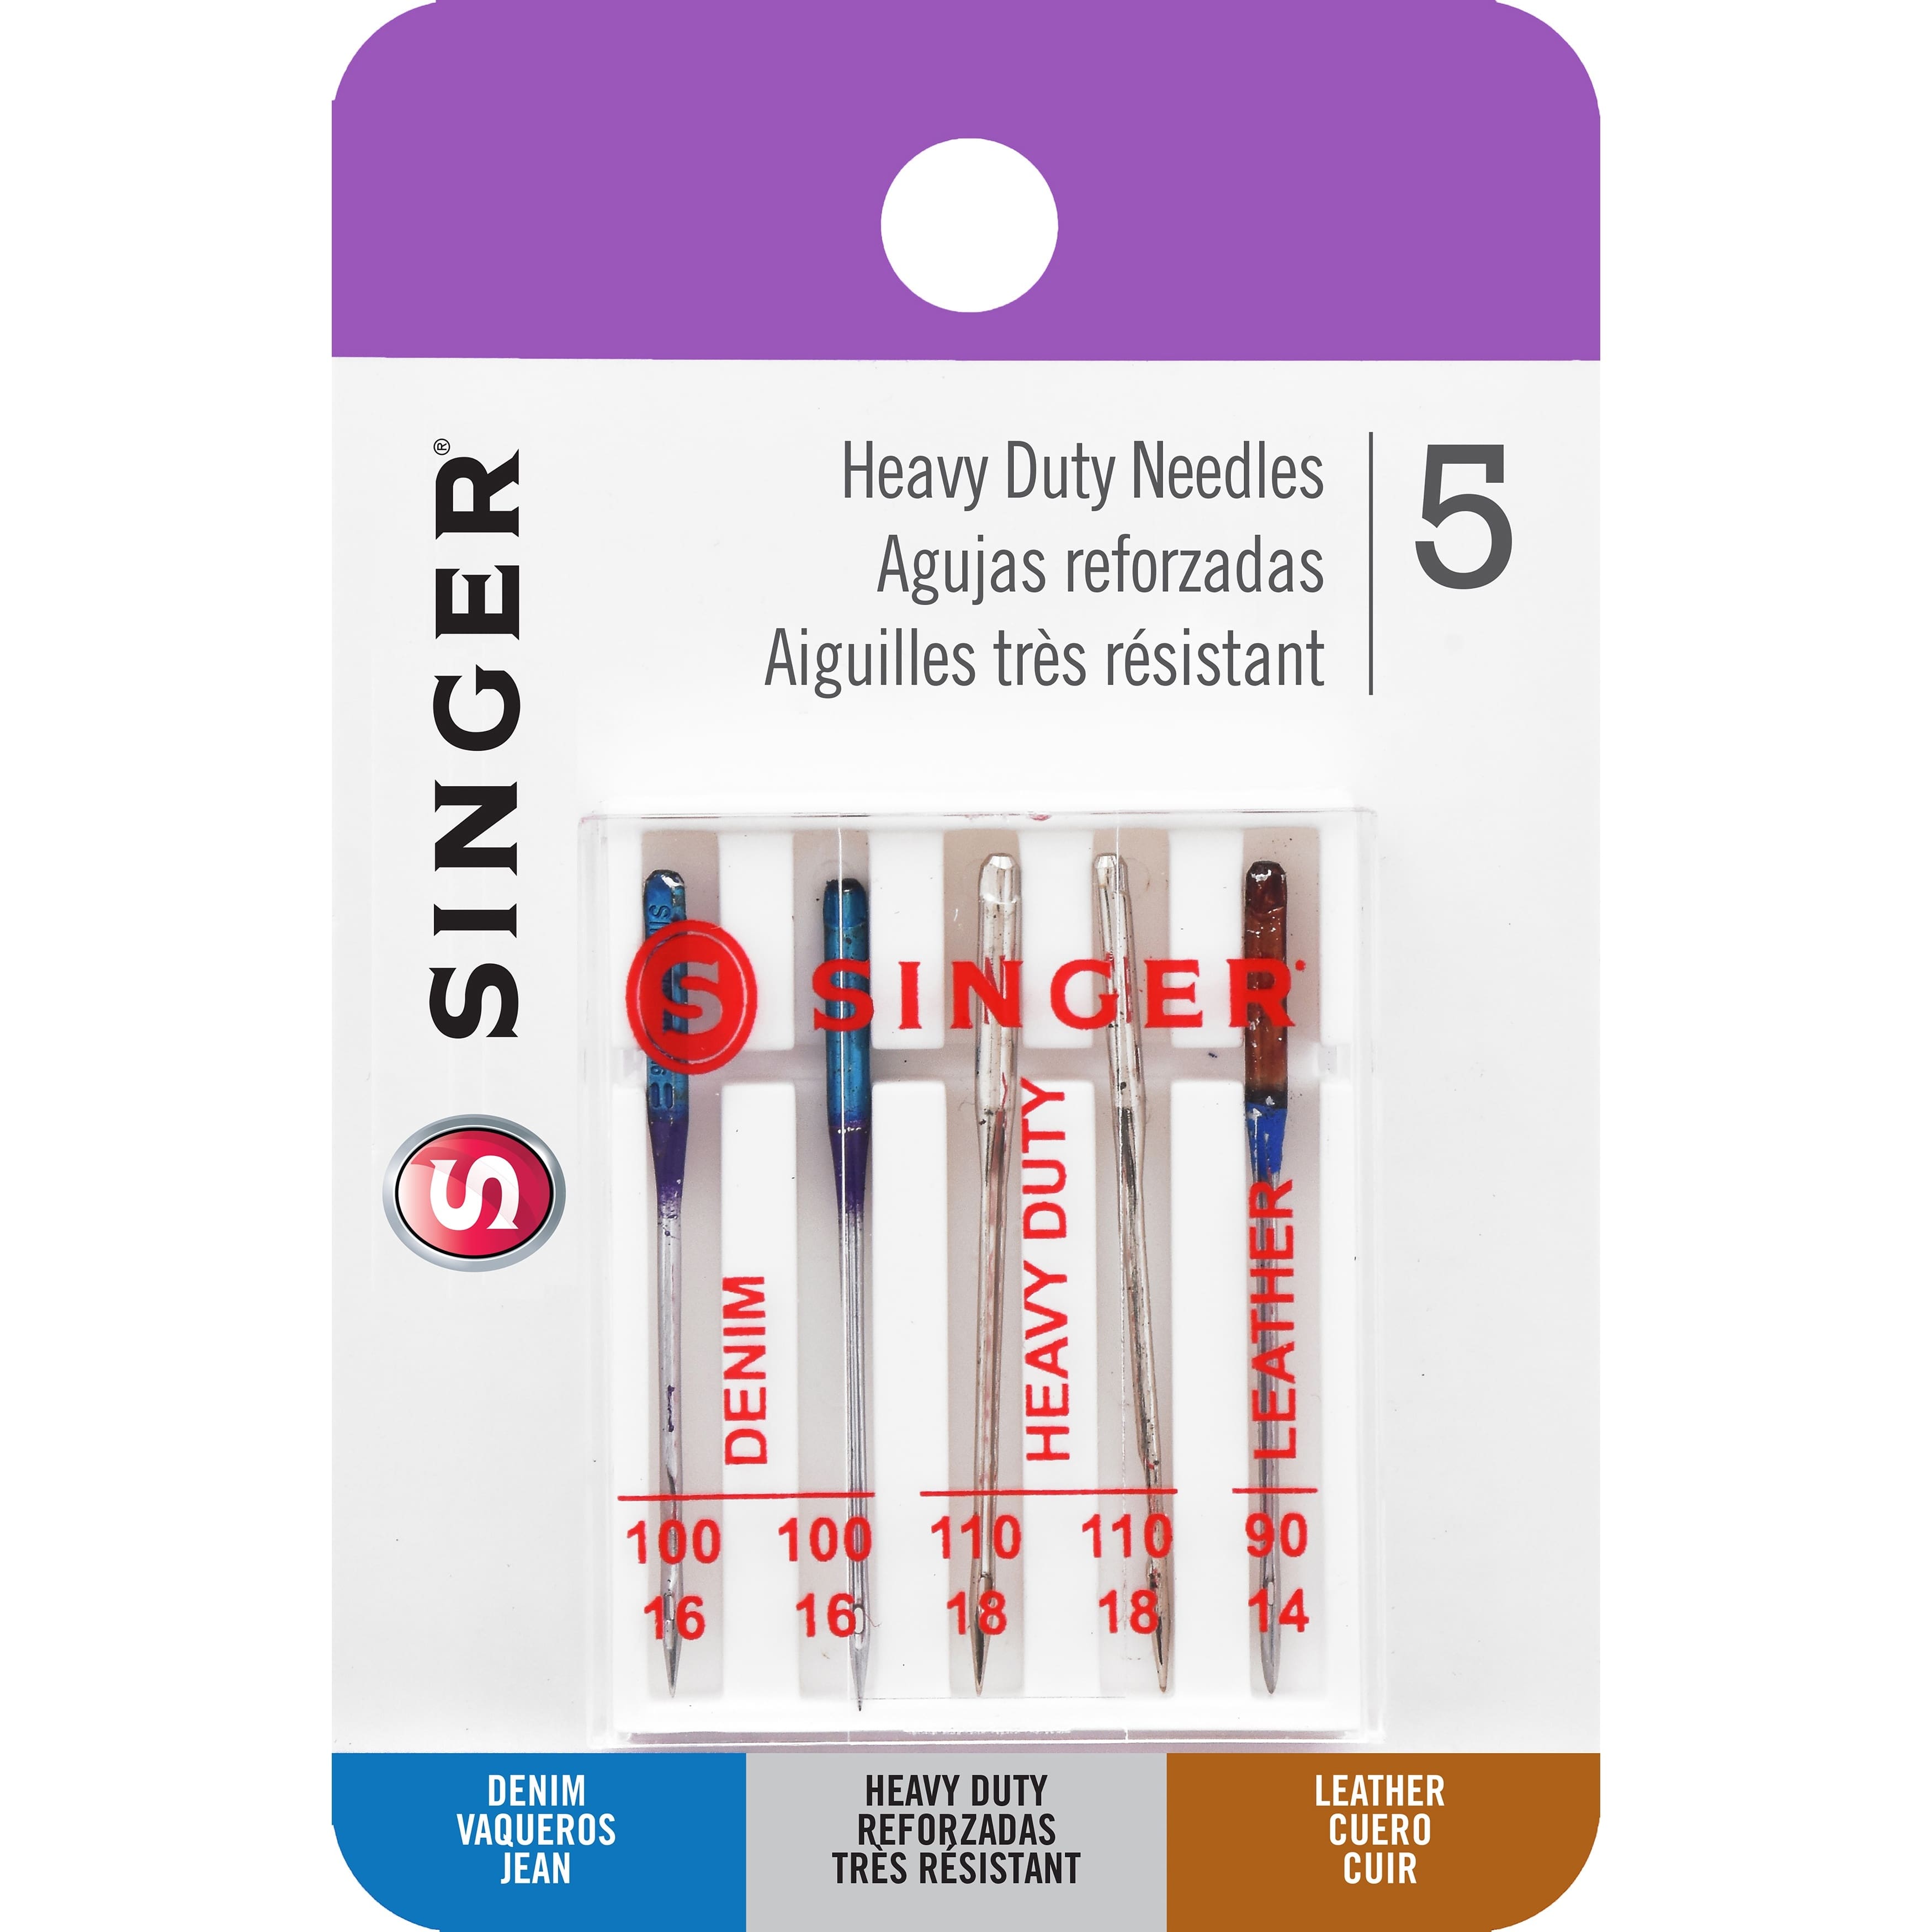 SINGER® Heavy Duty Sewing Machine Needles, 5ct., Michaels